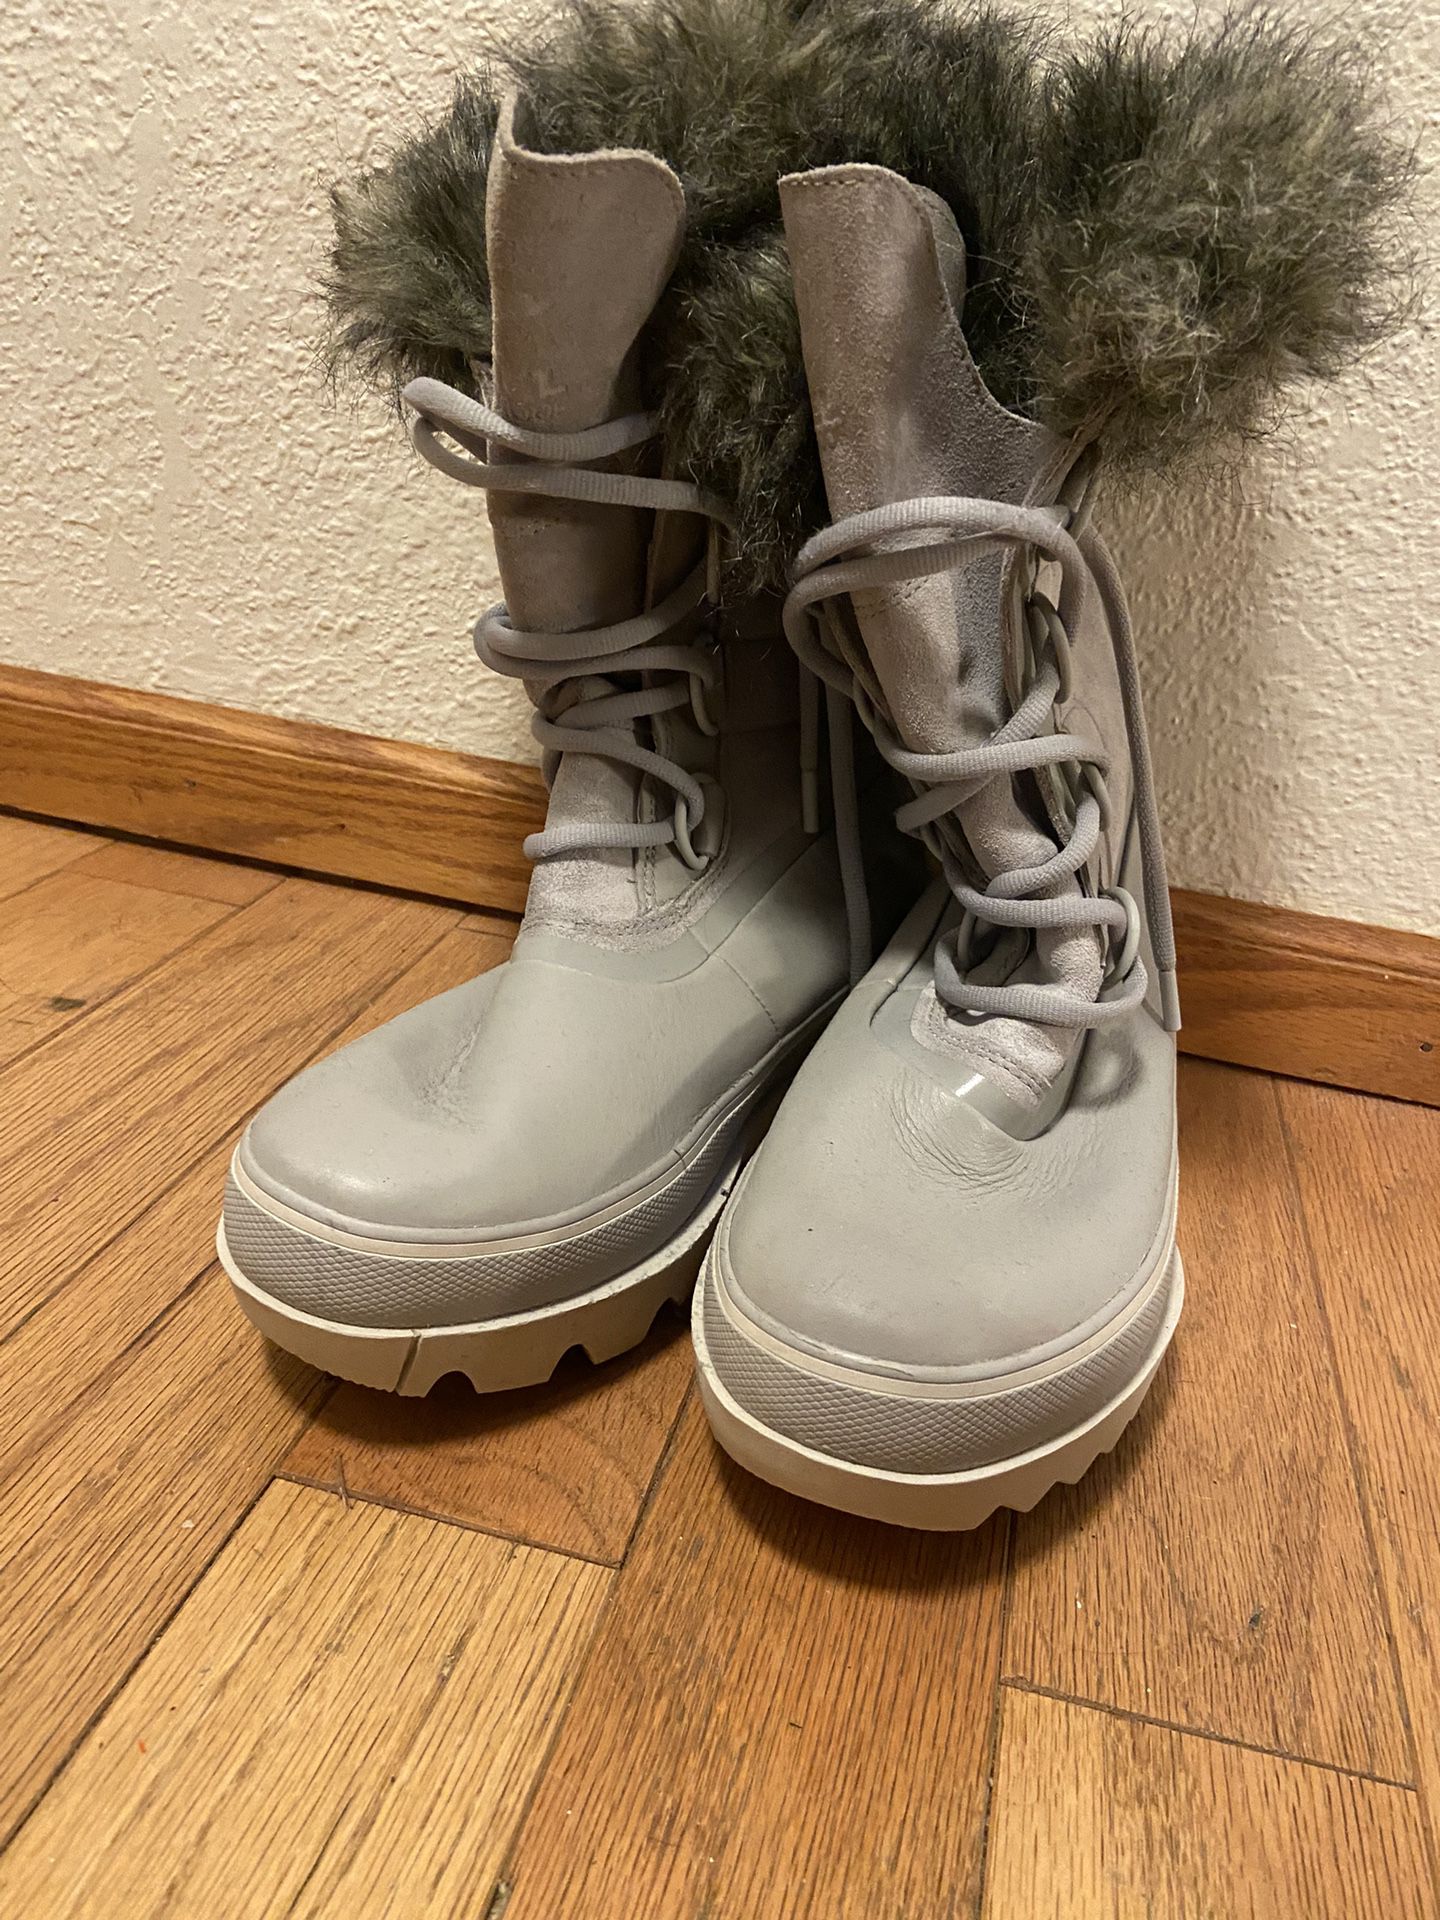 Sorel Women Snow Boots Size 8.5